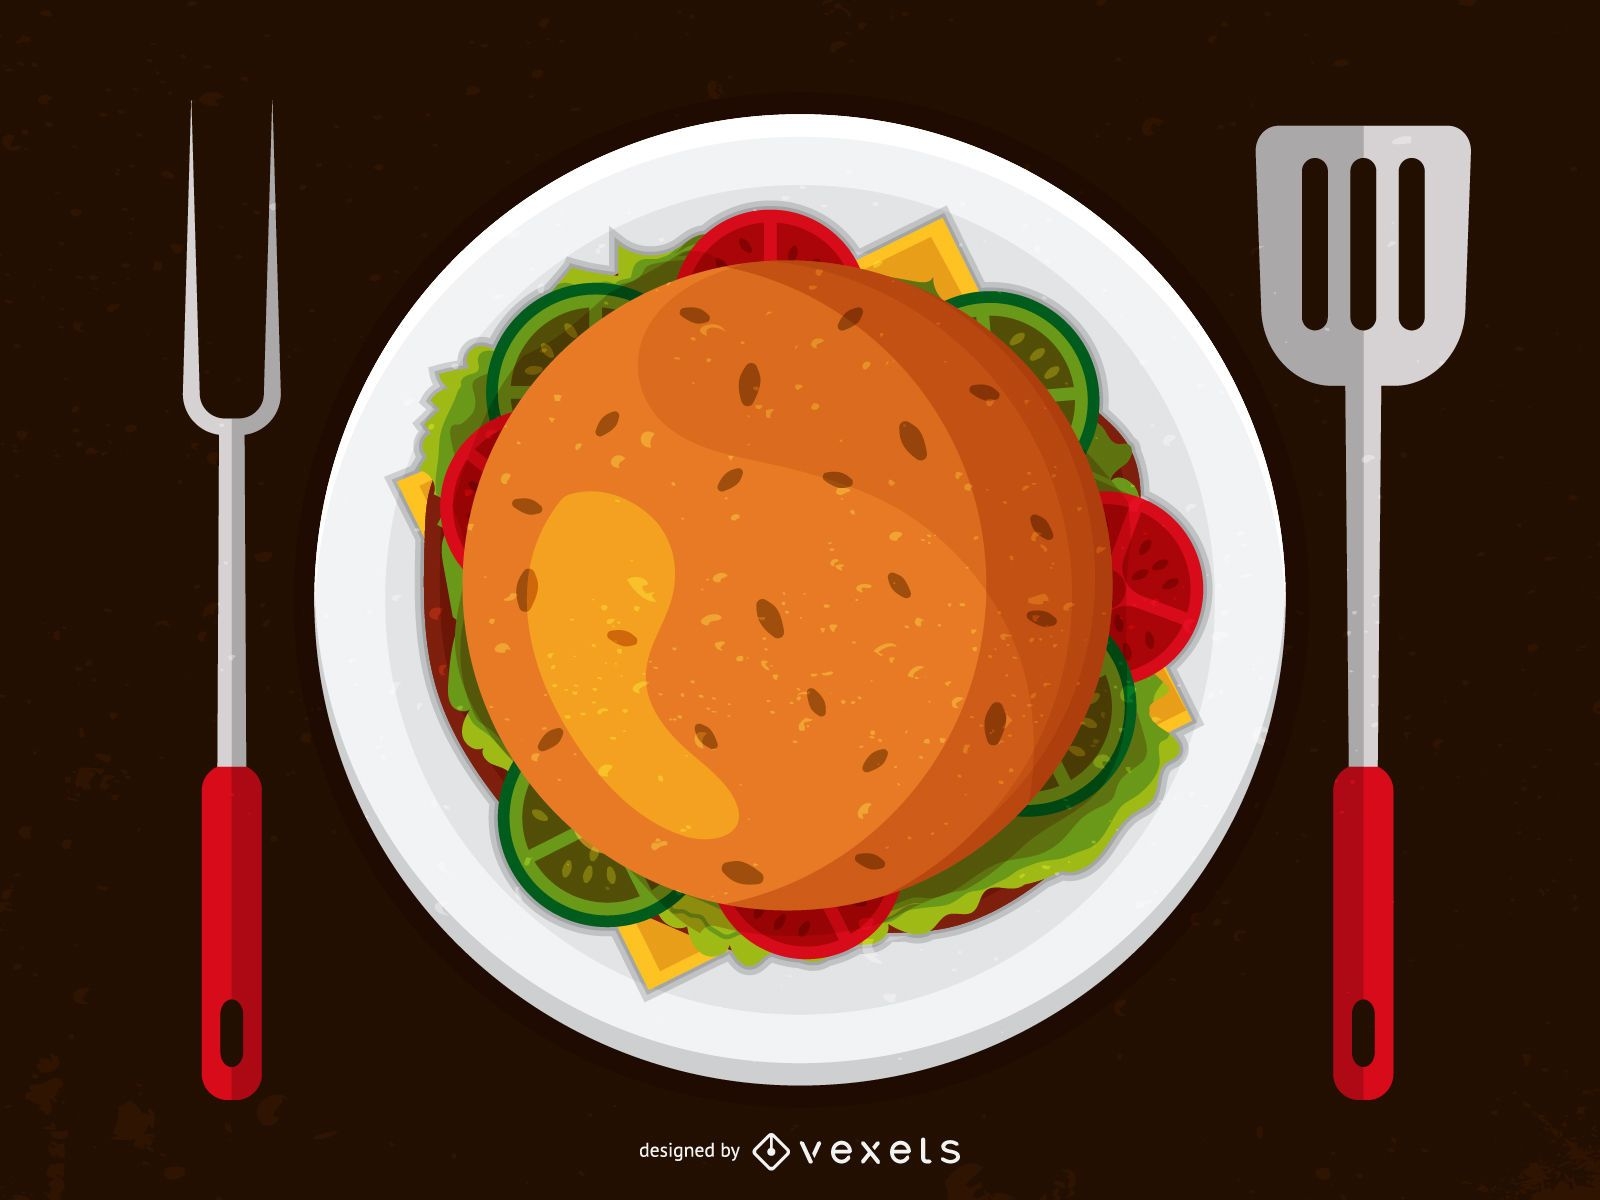 Burger and grill utensils illustration